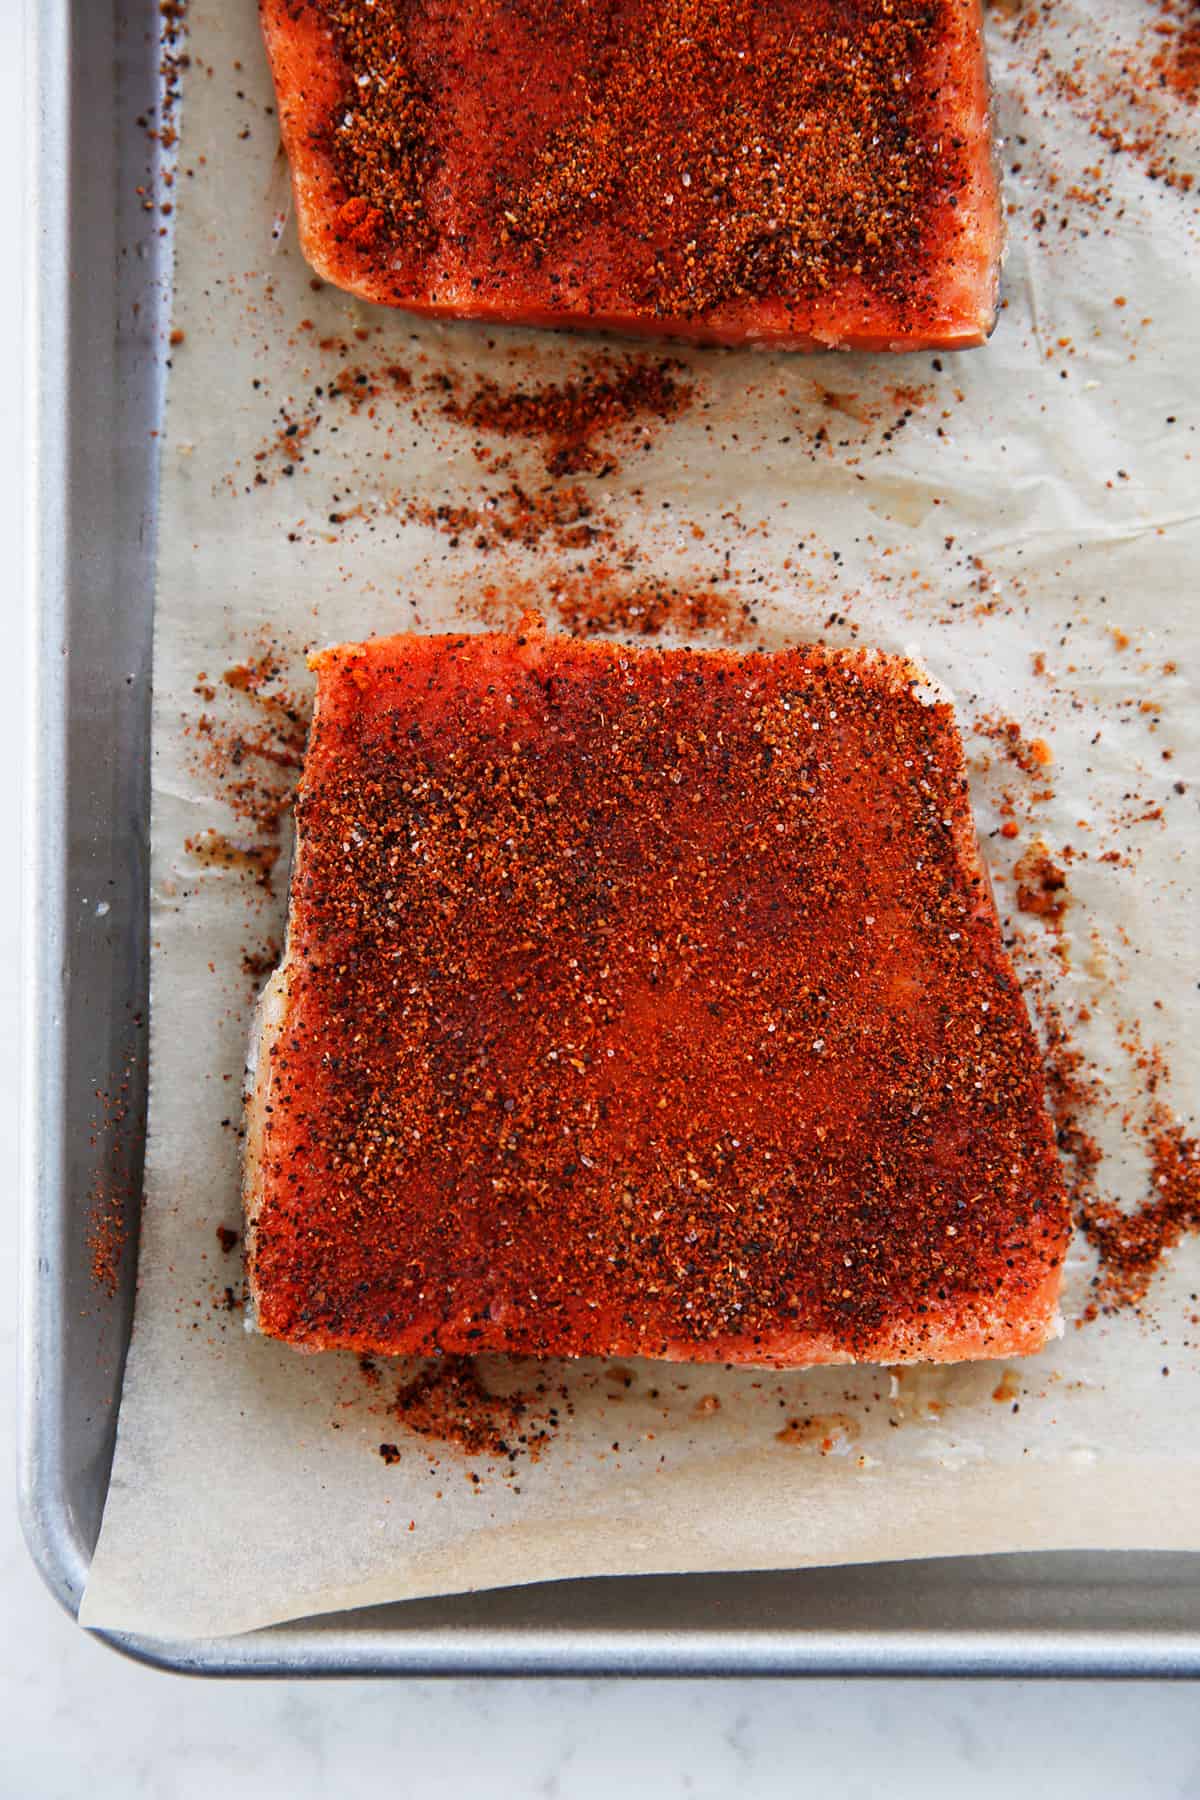 Chili powder rubbed on salmon.